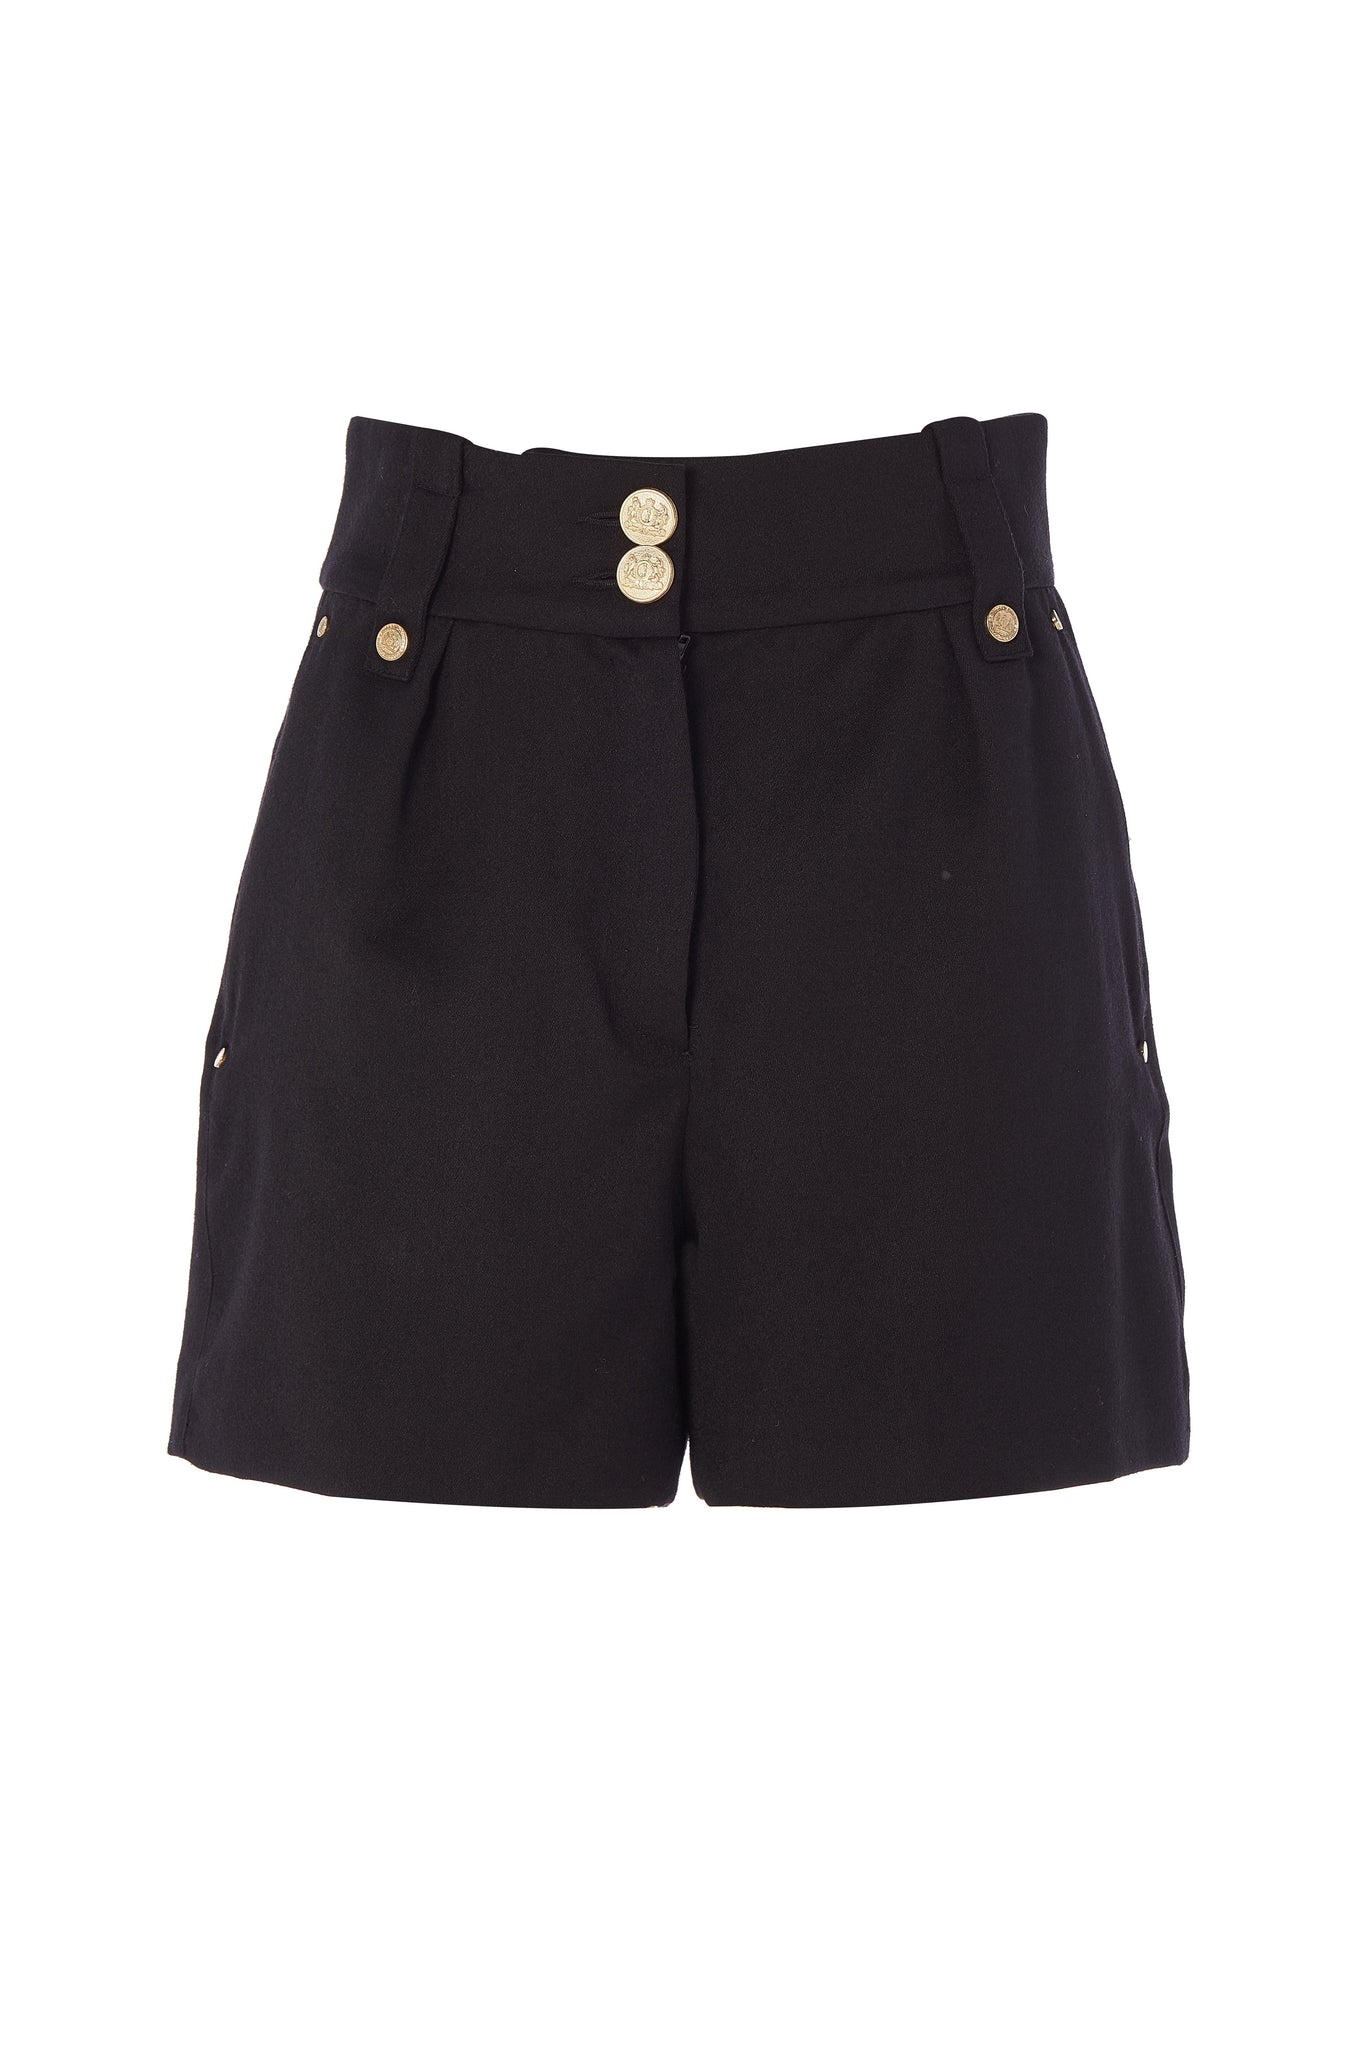 Luxe Tailored Short (Black barathea) – Holland Cooper